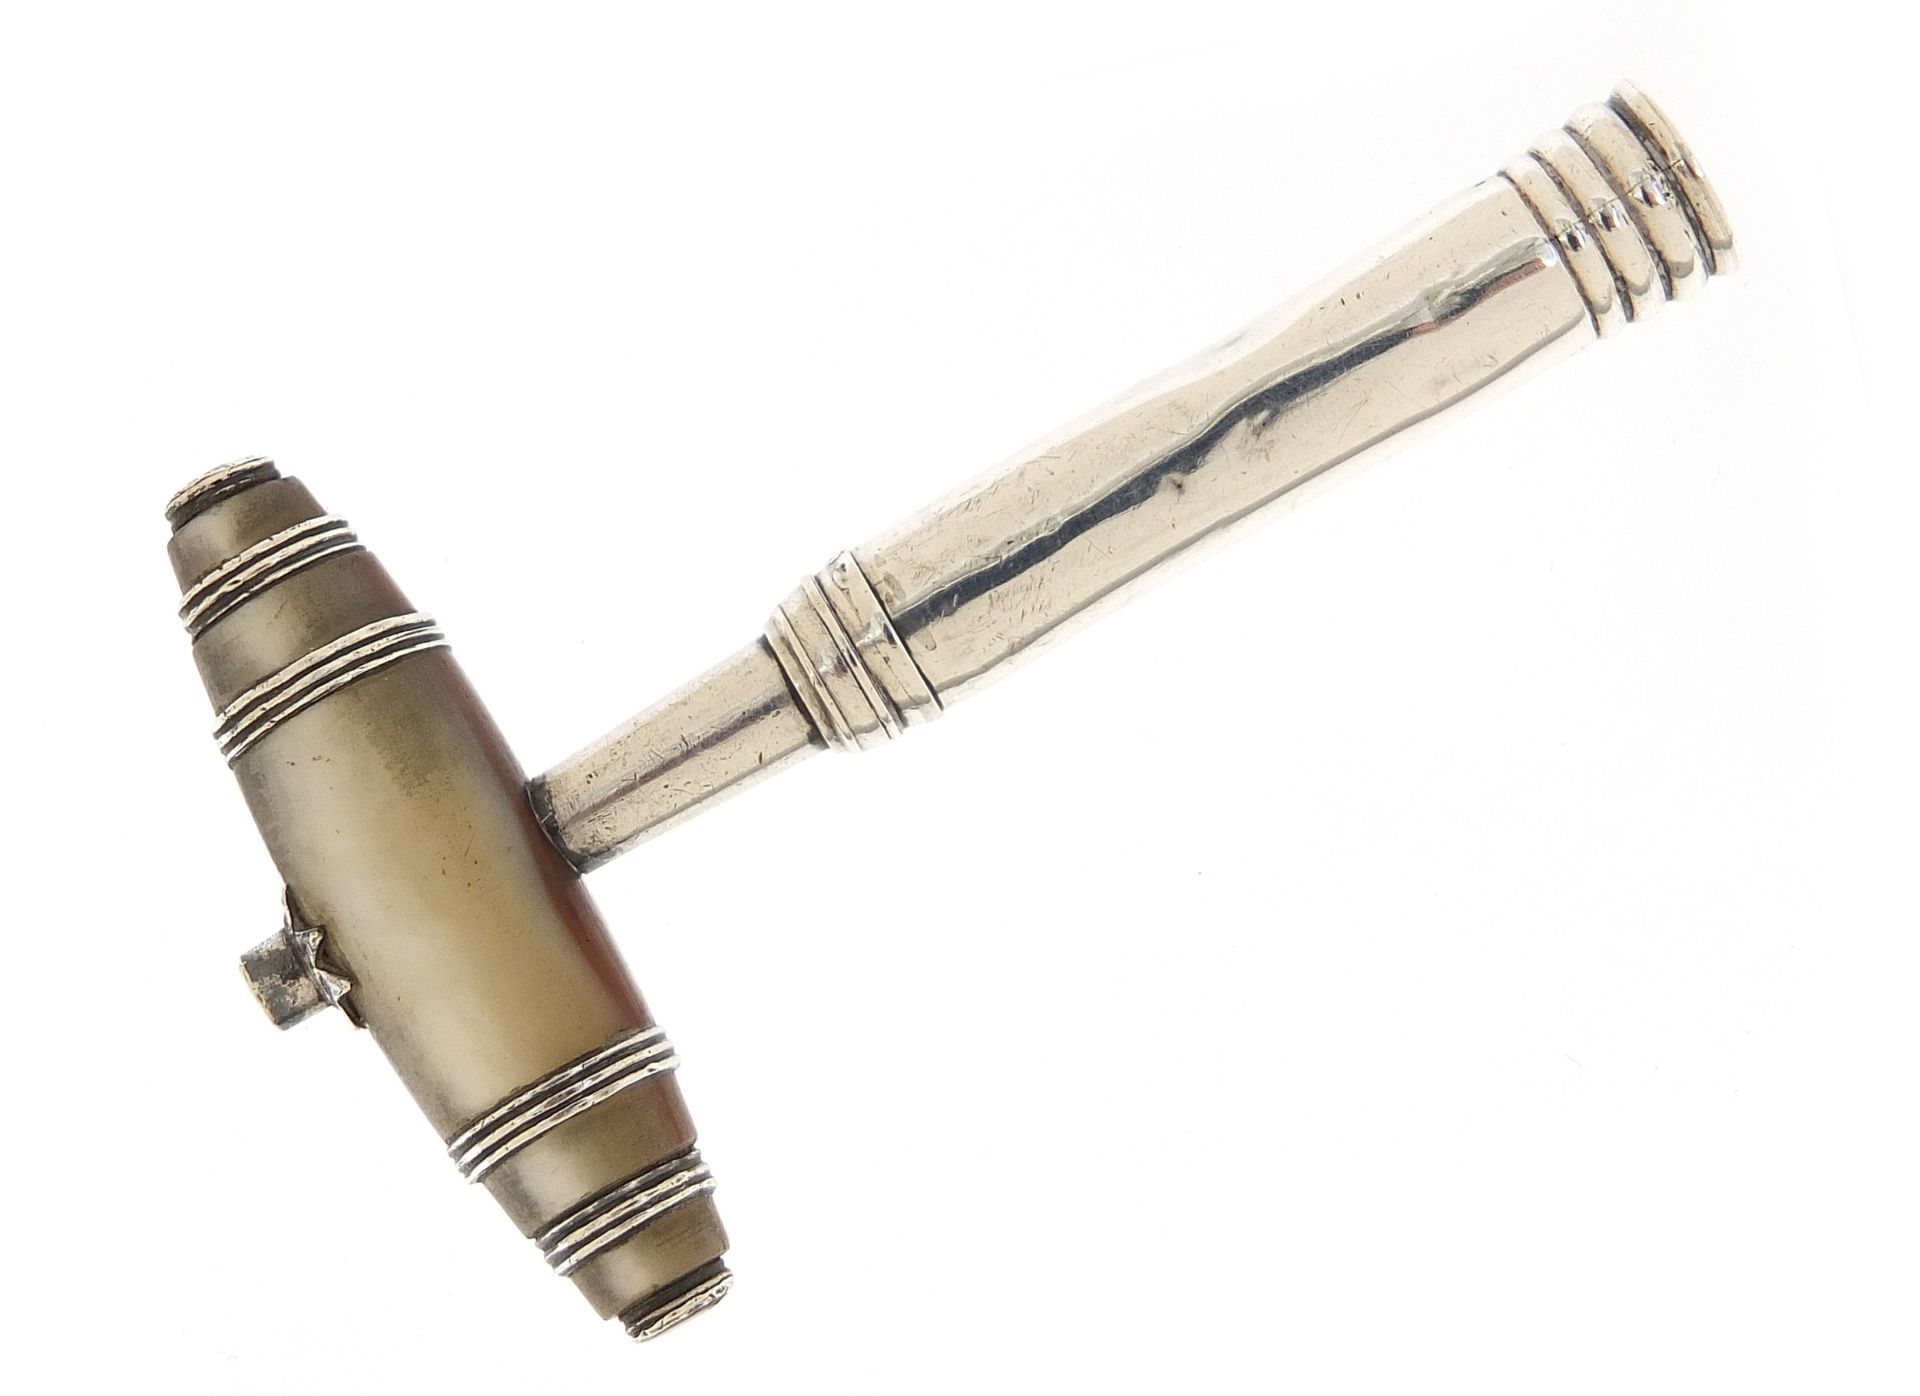 Antique silver corkscrew by Samuel Pemberton, 8cm in length - Image 4 of 5